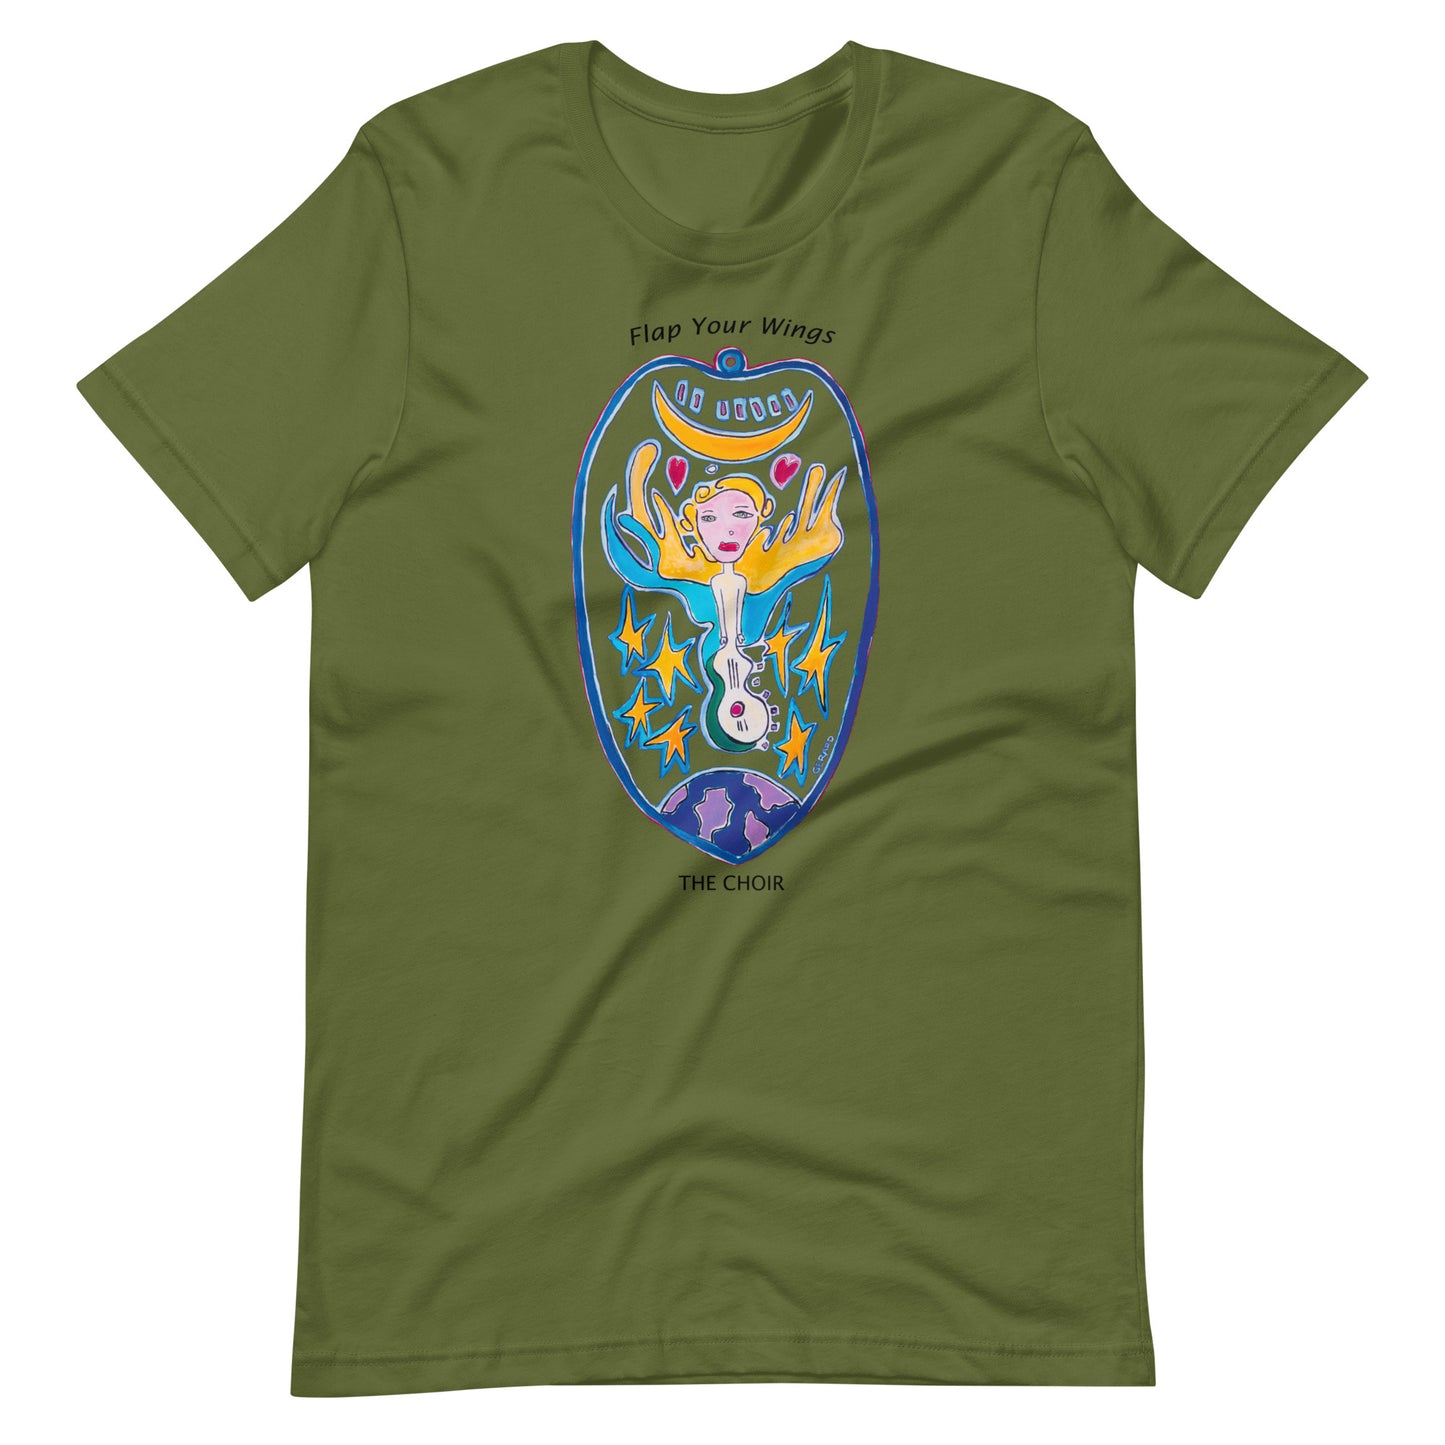 Flap Your Wings - Unisex t-shirt** (addt'l colors available)